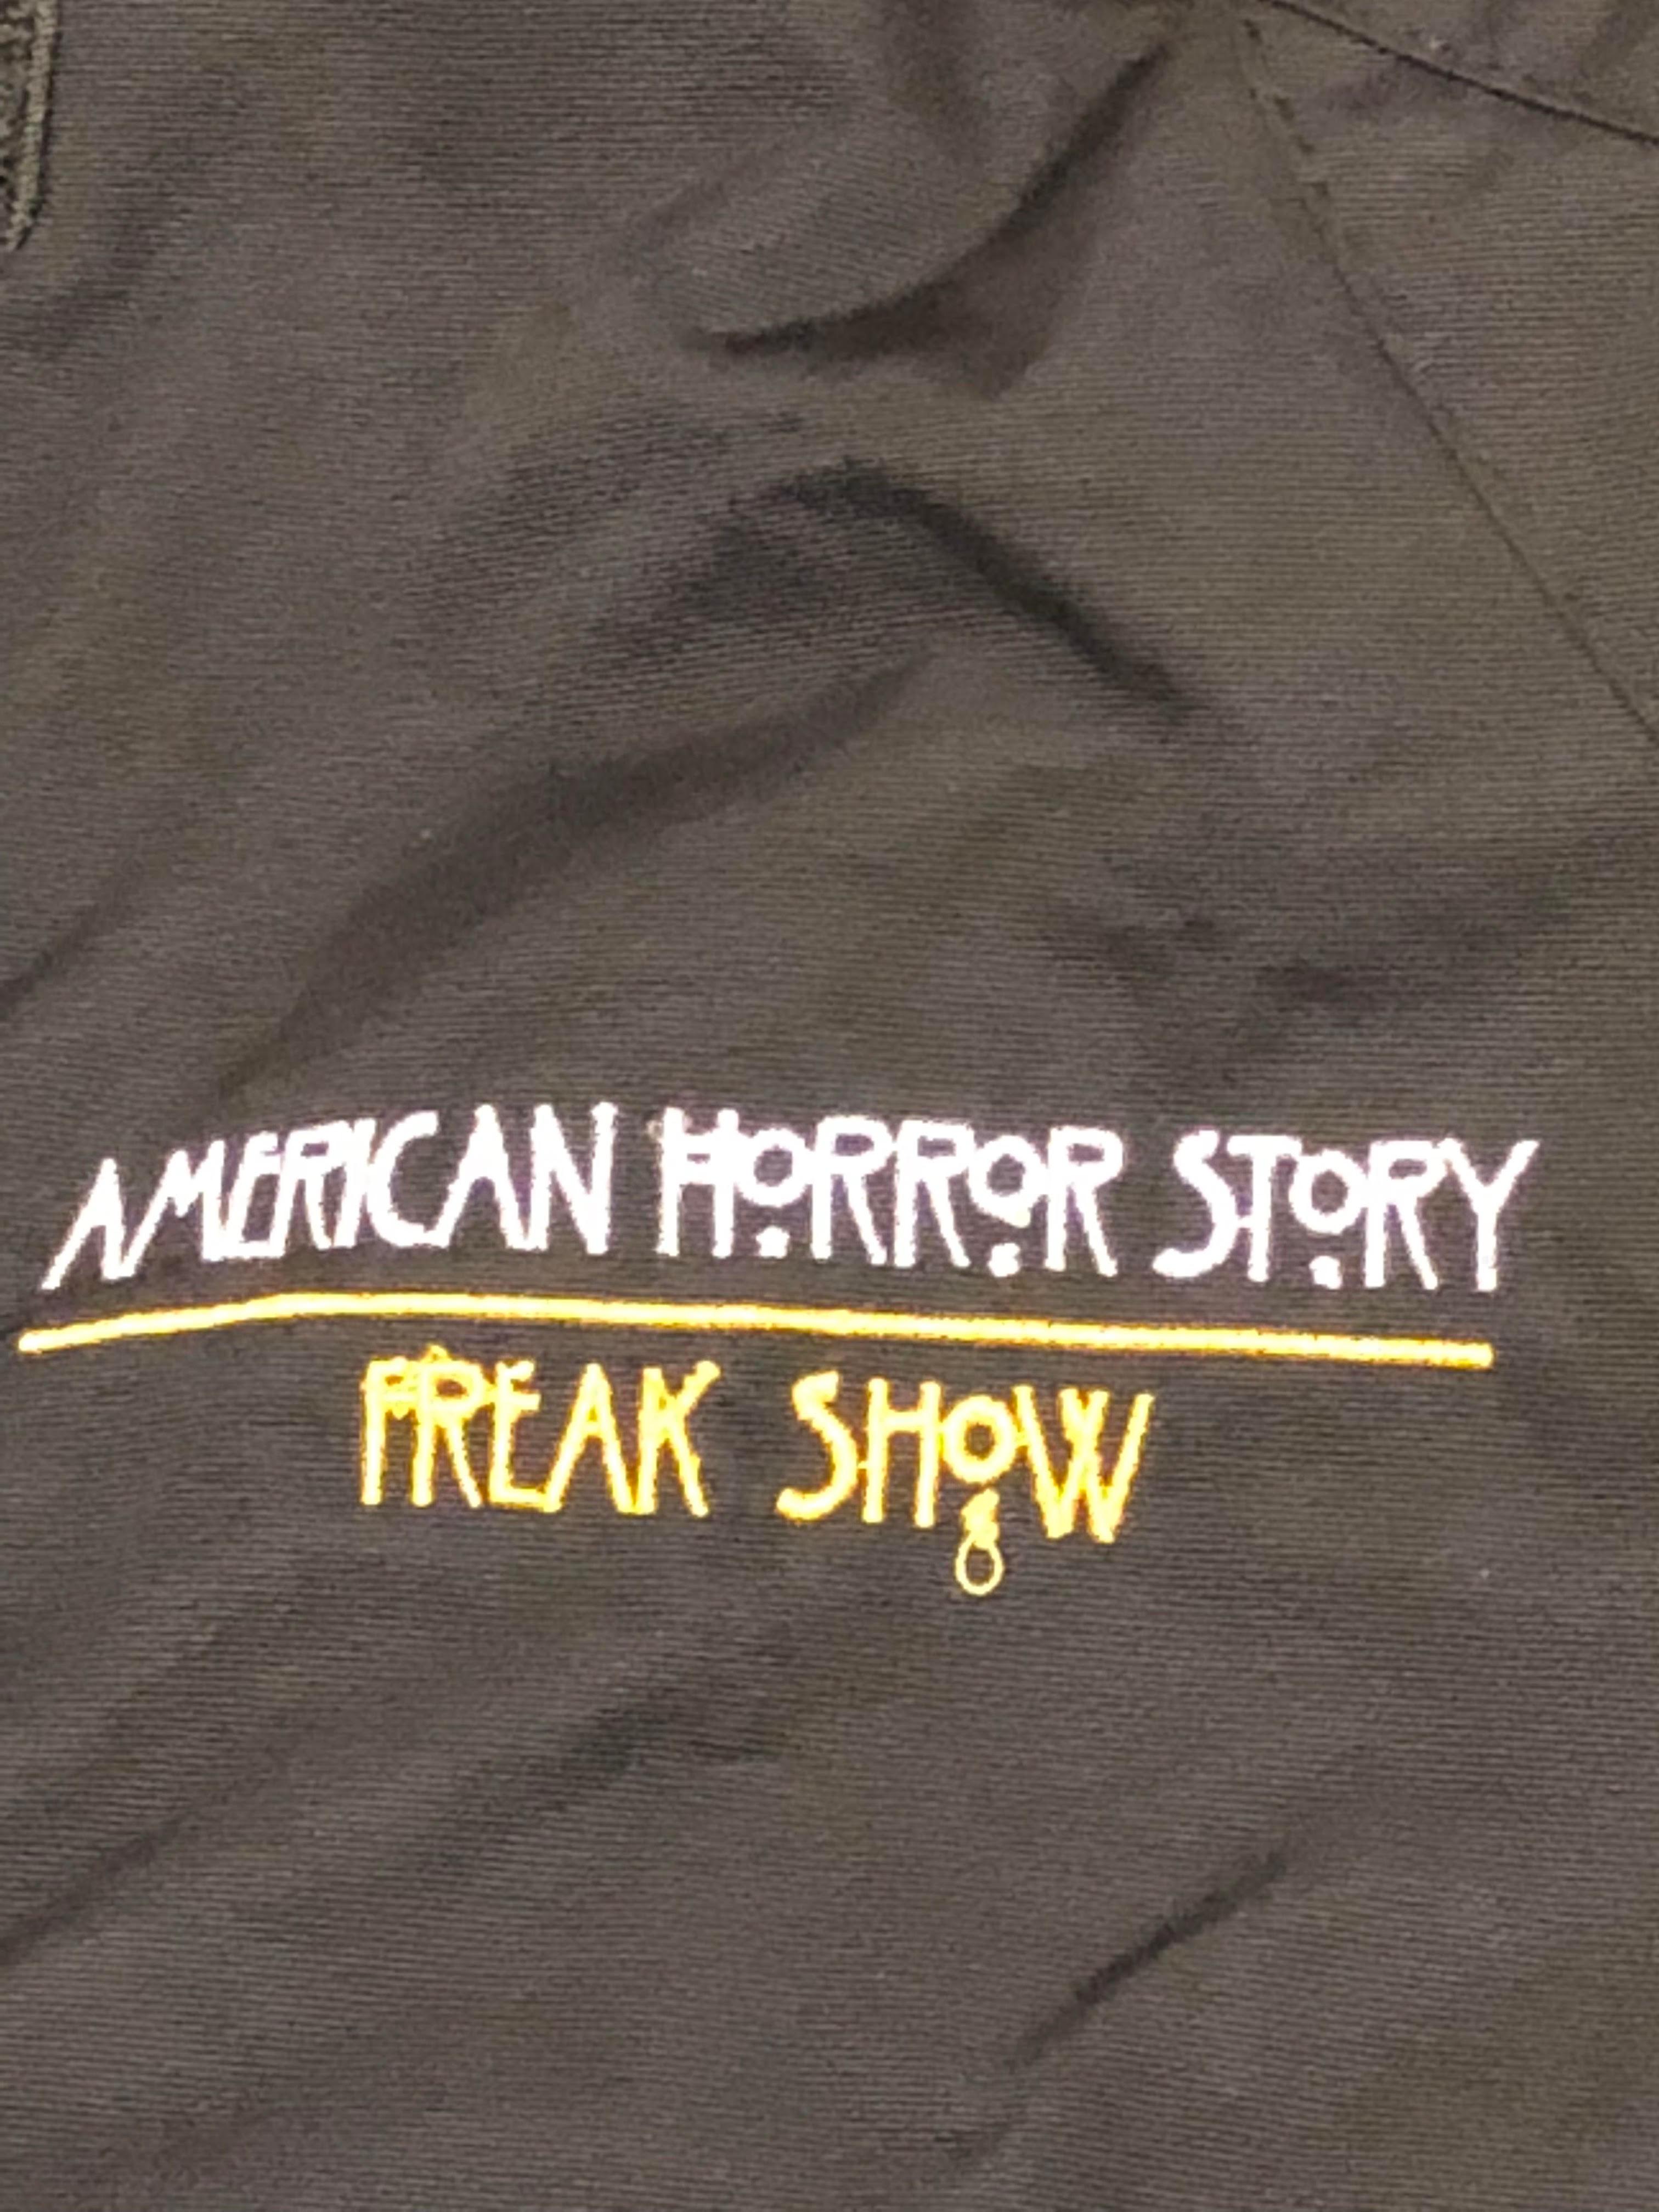 American Horror Story 2014 Crew Jacket